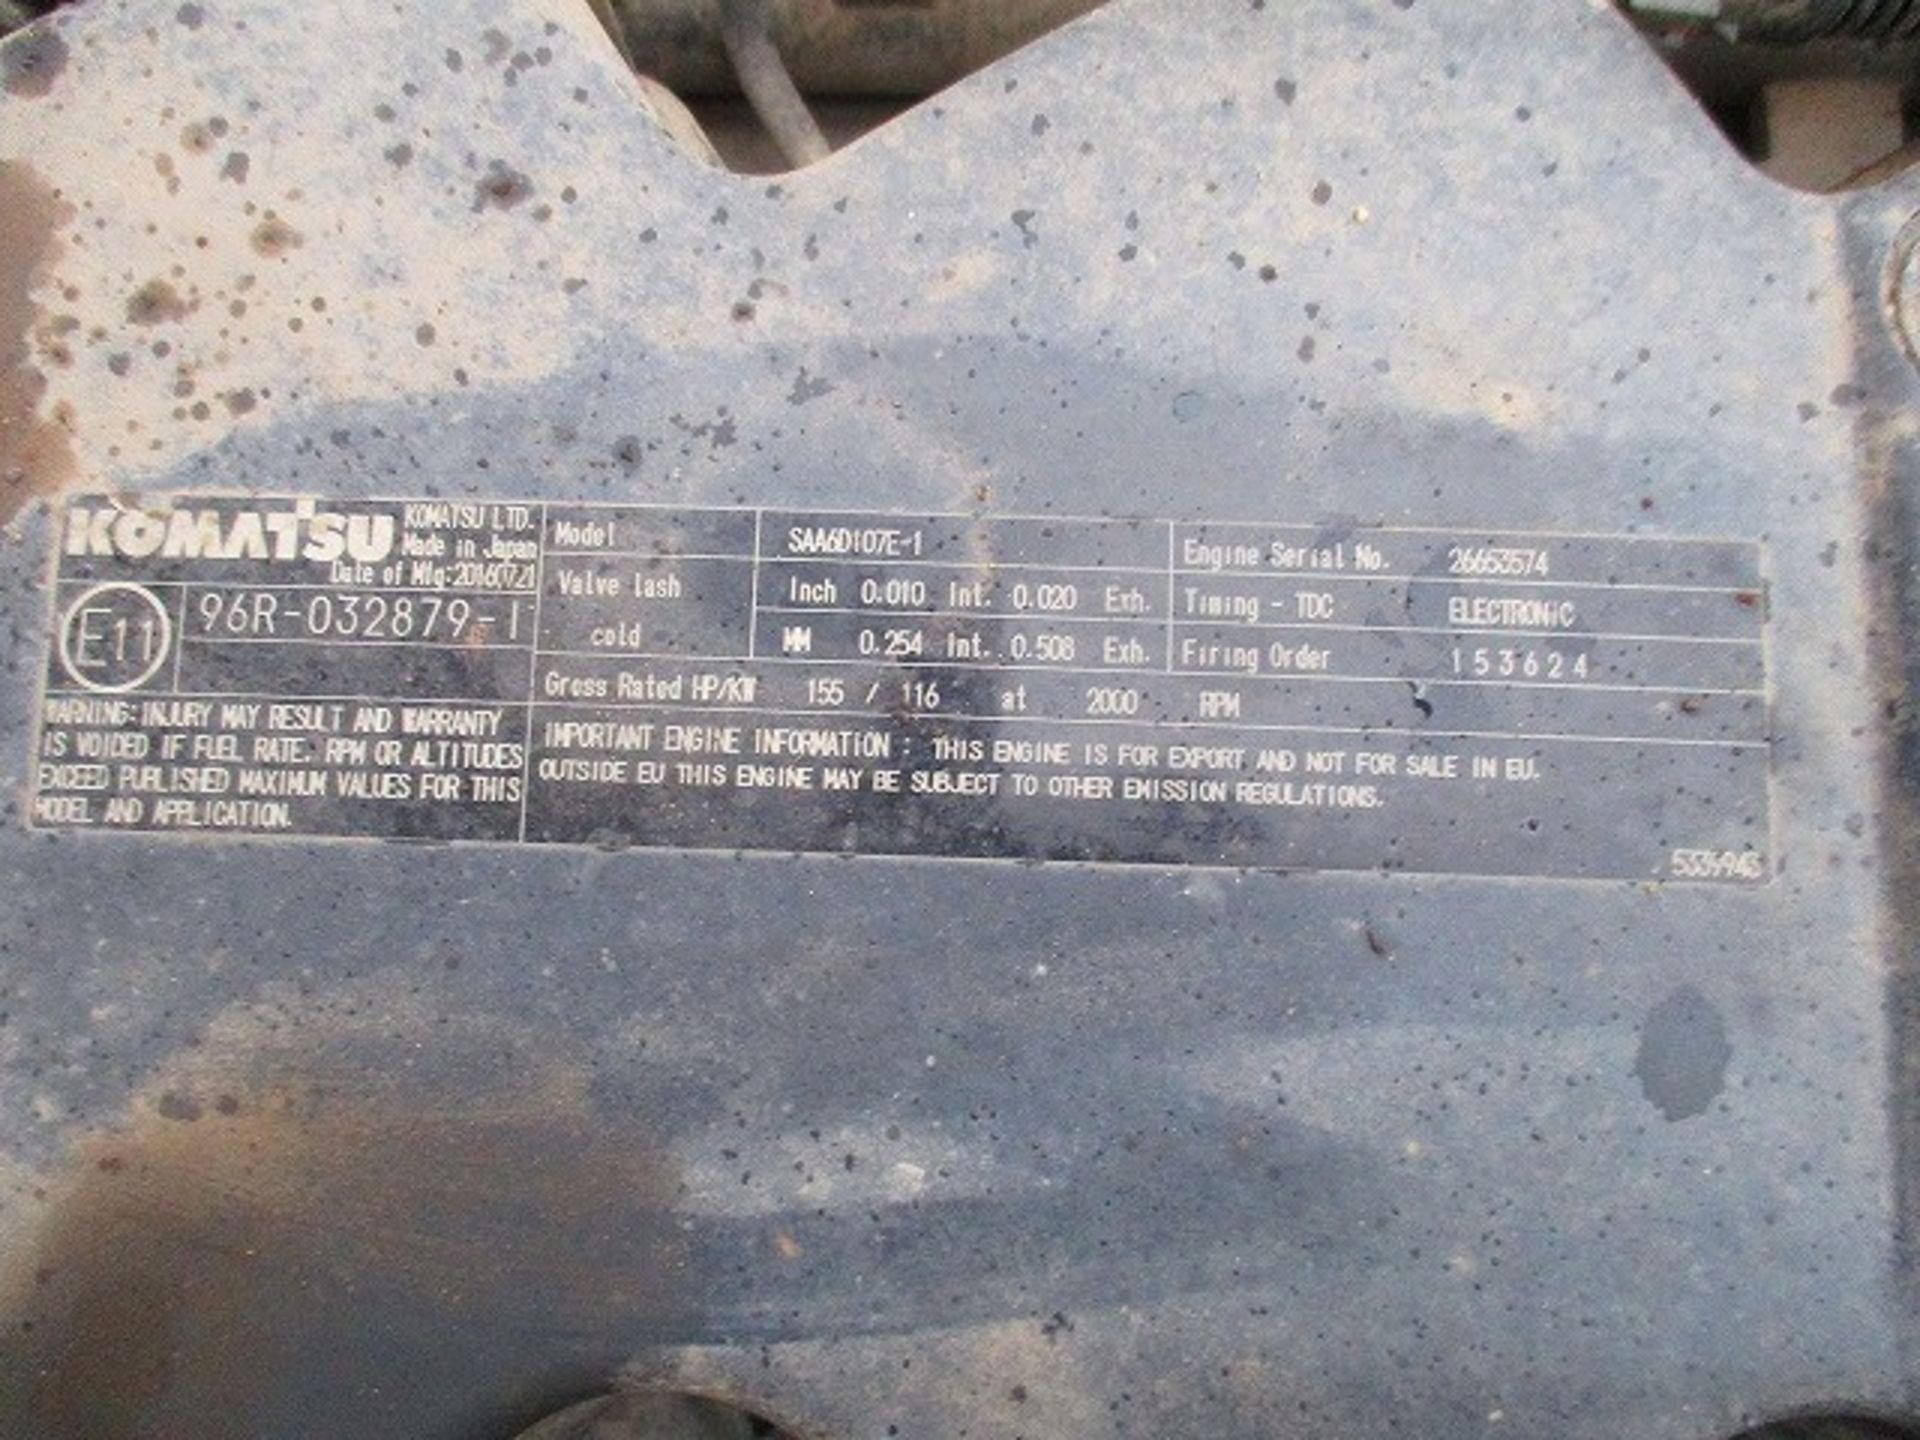 Komatsu PC200LC-8 Tracked Excavator - Image 21 of 24